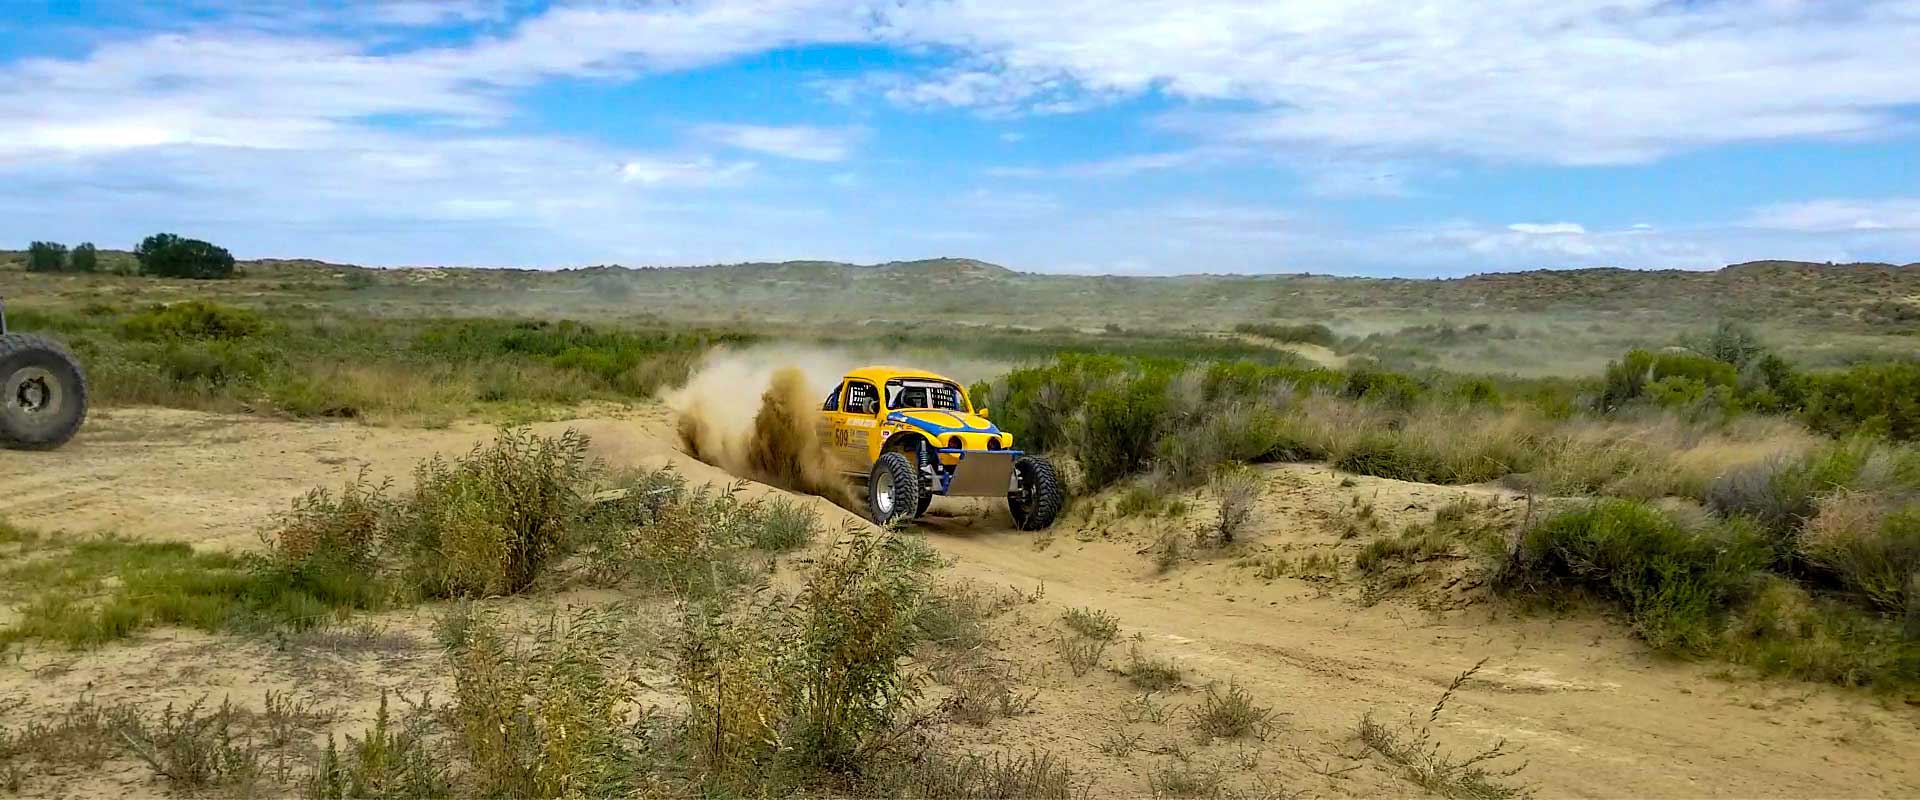 High Desert Offroad Racing Truck Racing Montana